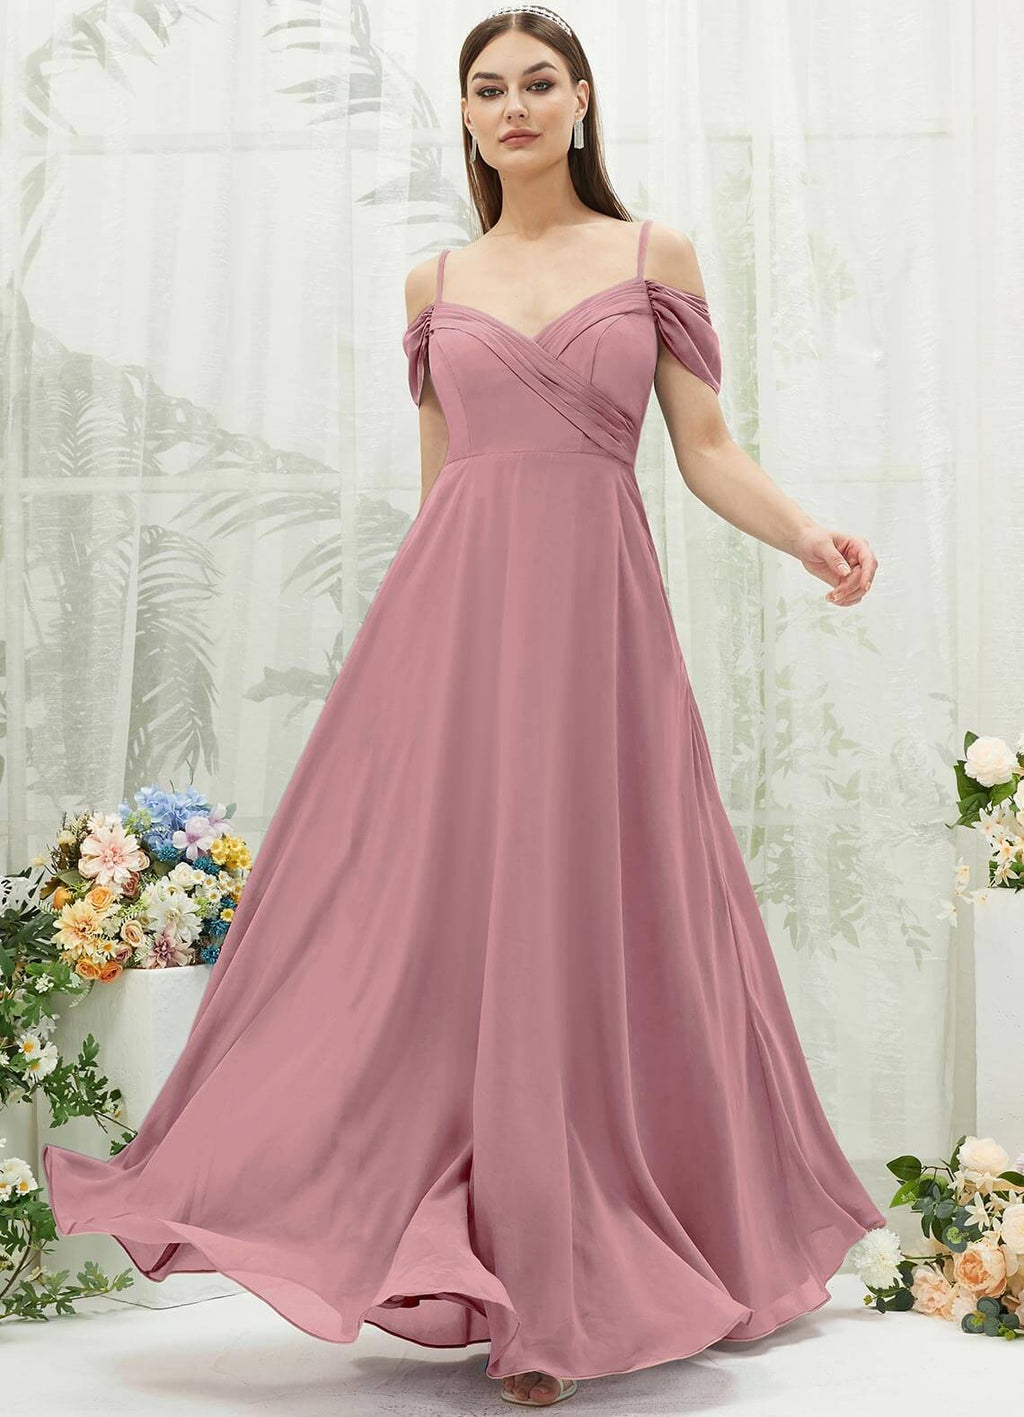 NZ Bridal Vintage Convertible Chiffon Maxi Bridesmaid Dress With Pocket BG30217 Spence a